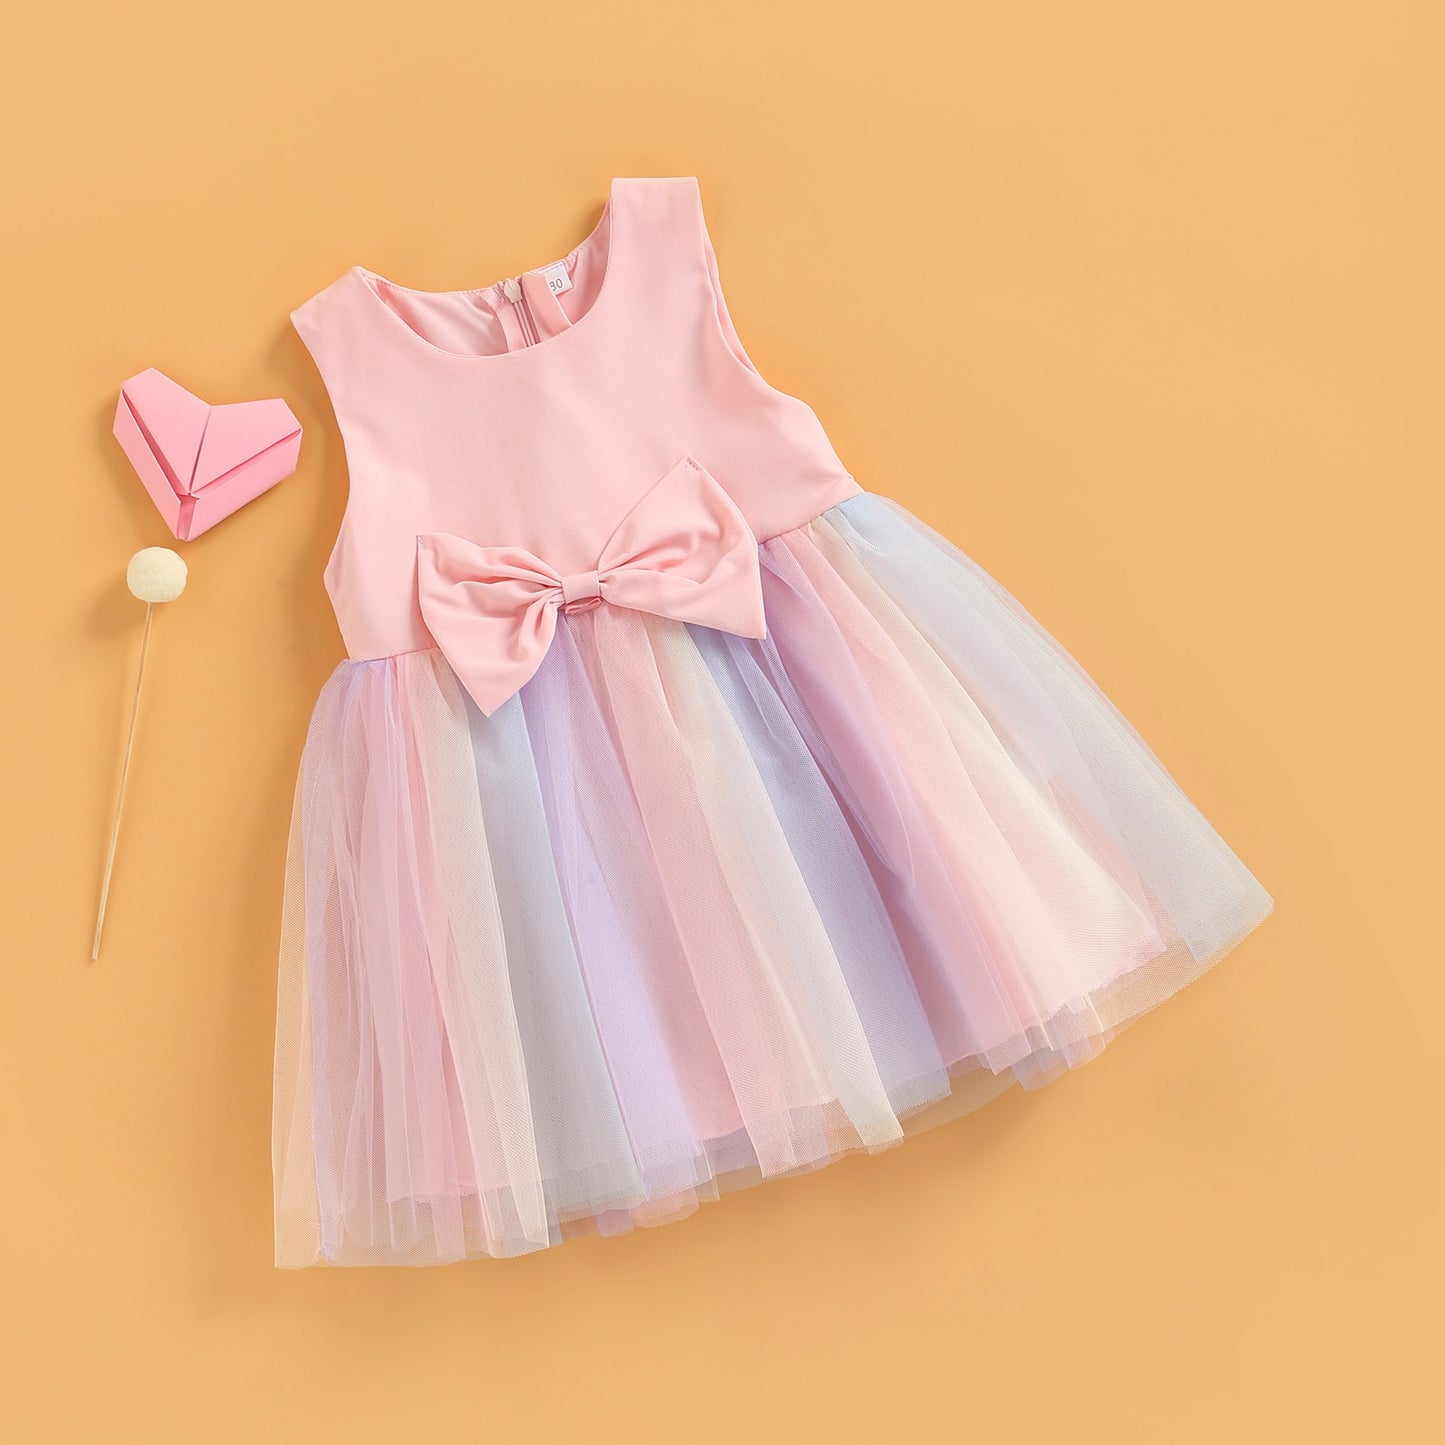 Toddler Kids Baby Girls Princess Dress Sleeveless Bowknot Rainbow Color Party Dress